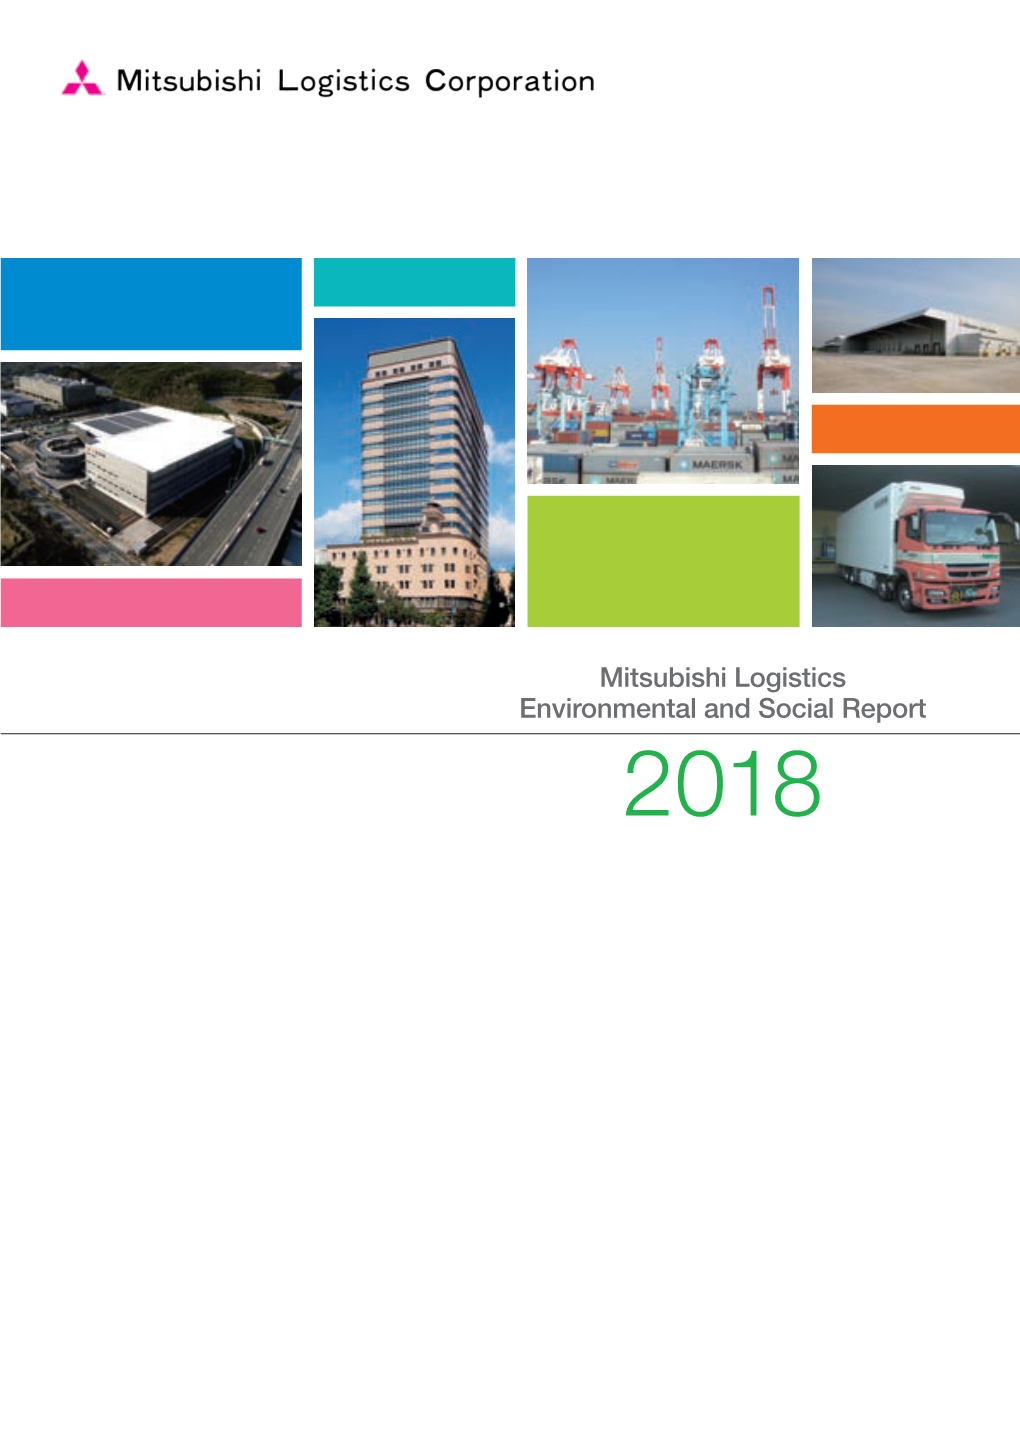 Mitsubishi Logistics Environmental and Social Report 2018